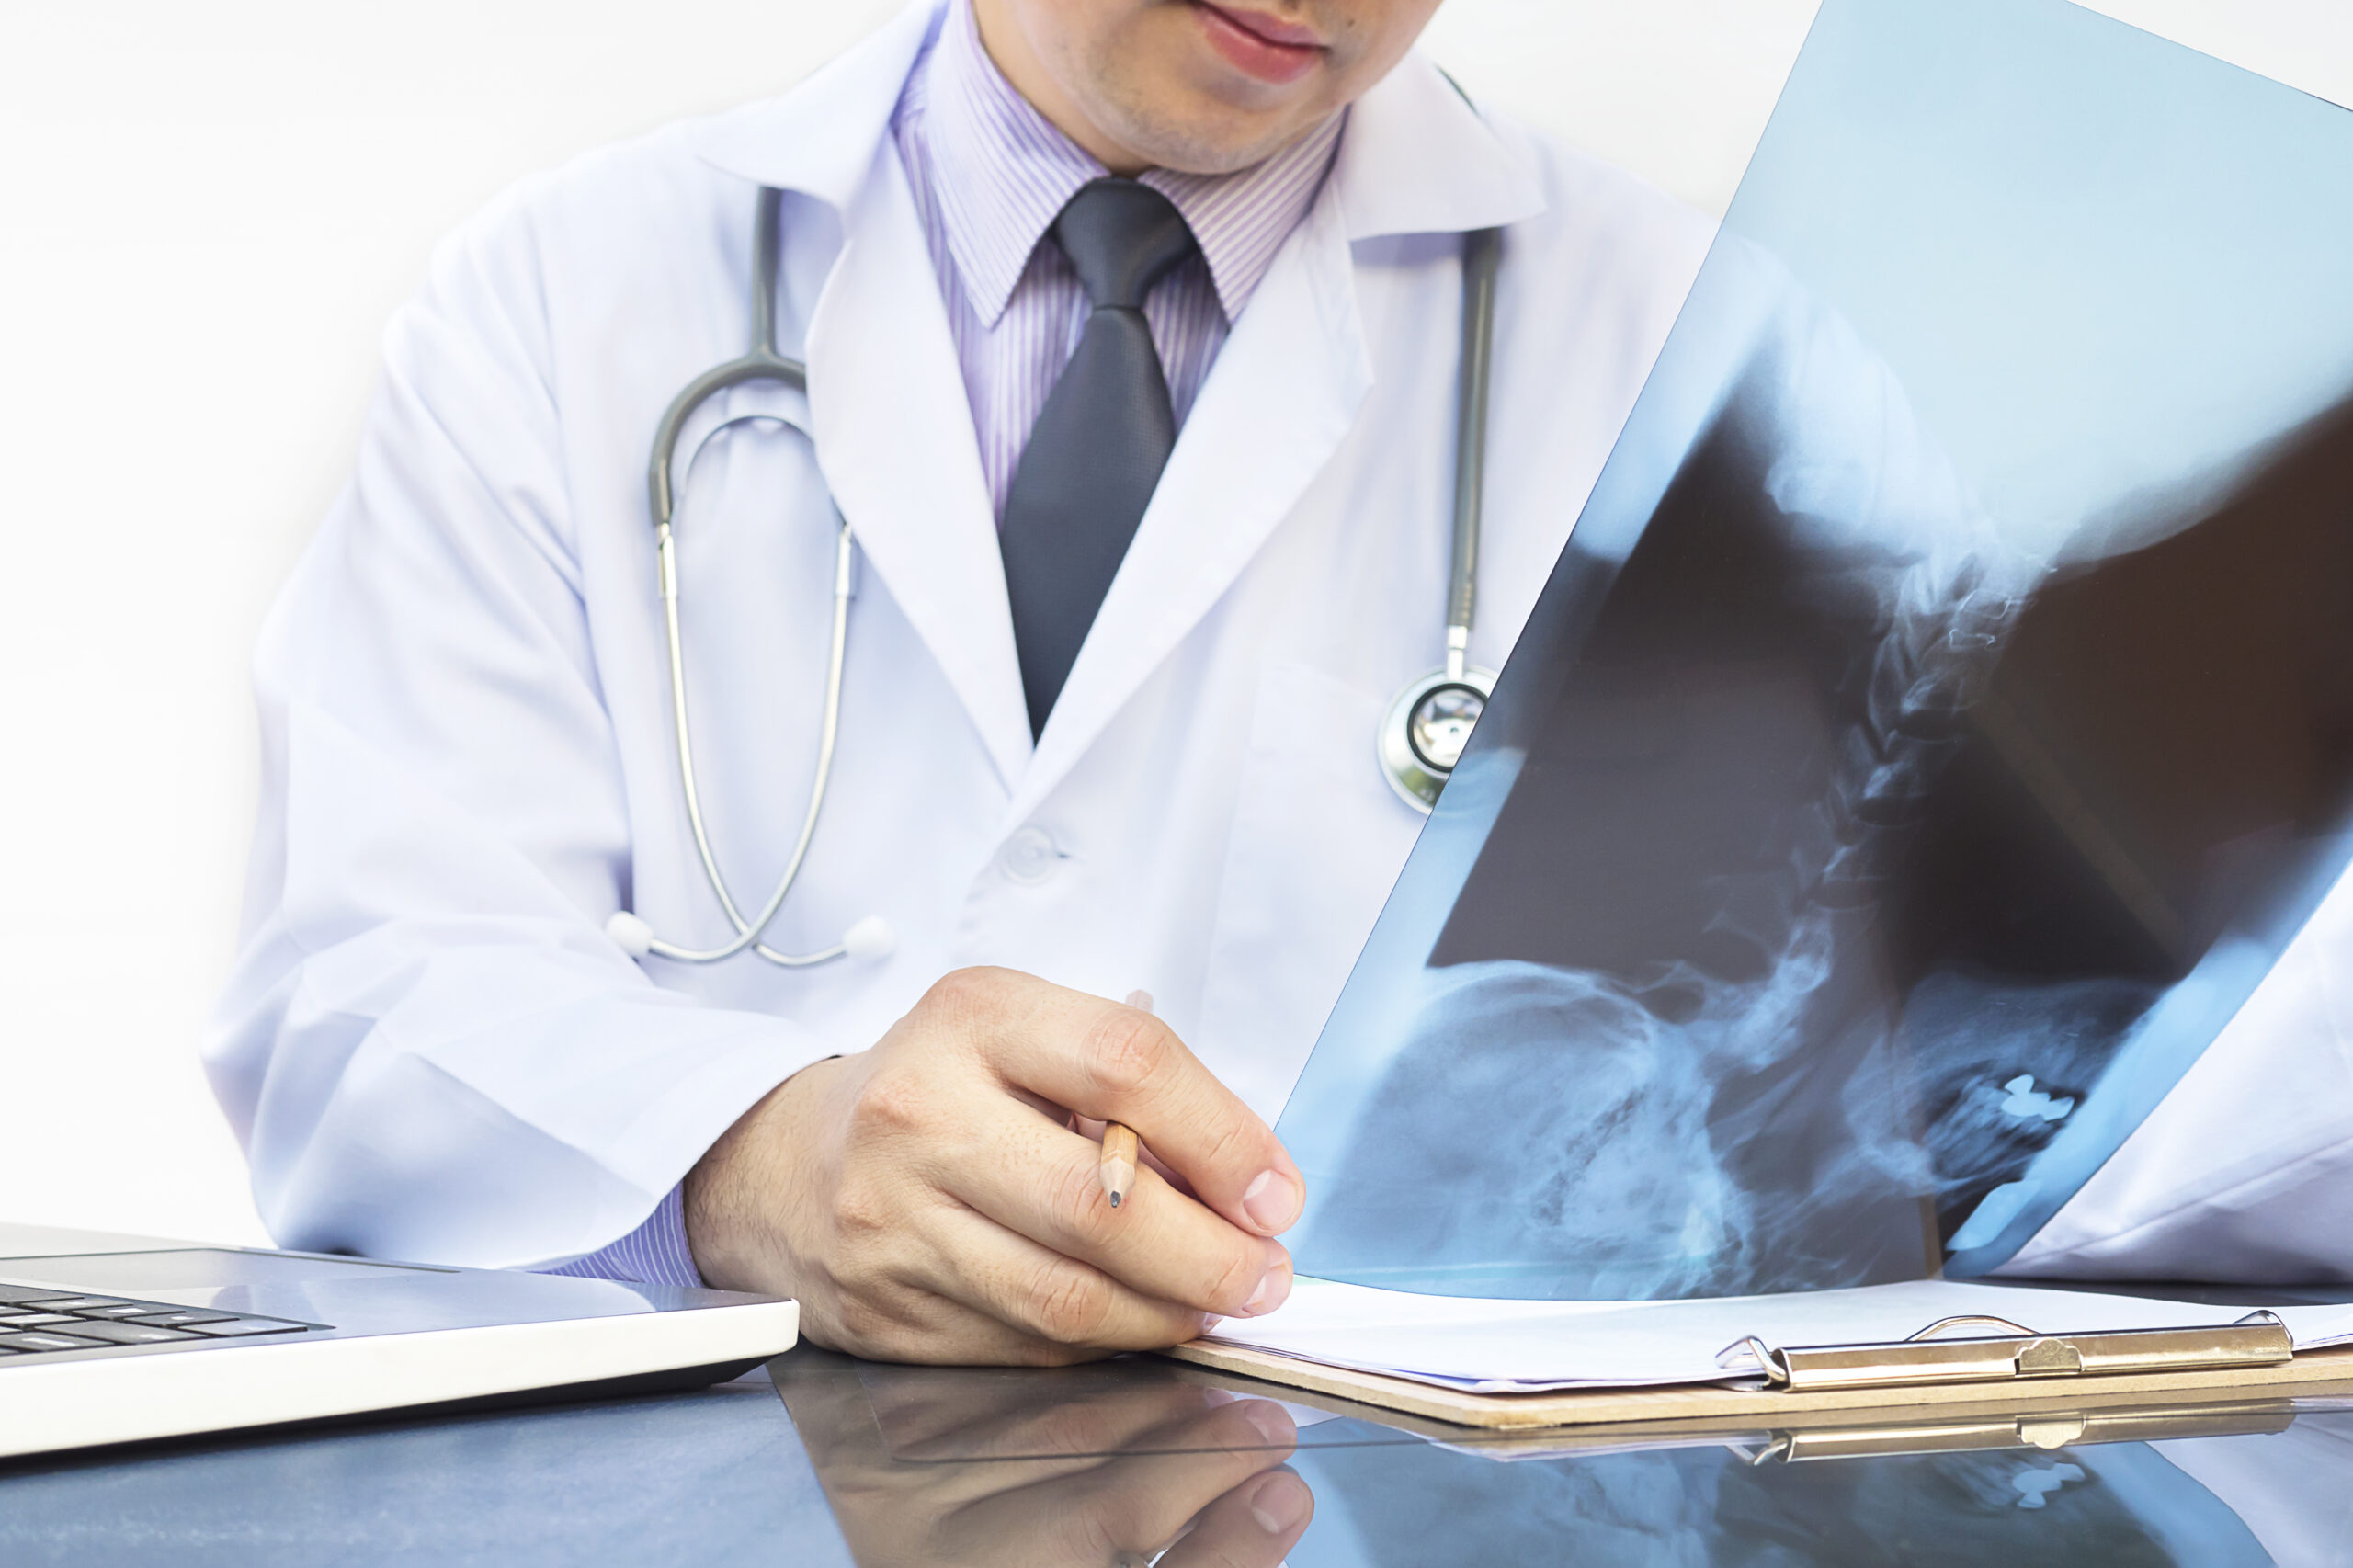 Doctor examine x-ray film over white background Image by jcomp on Freepik